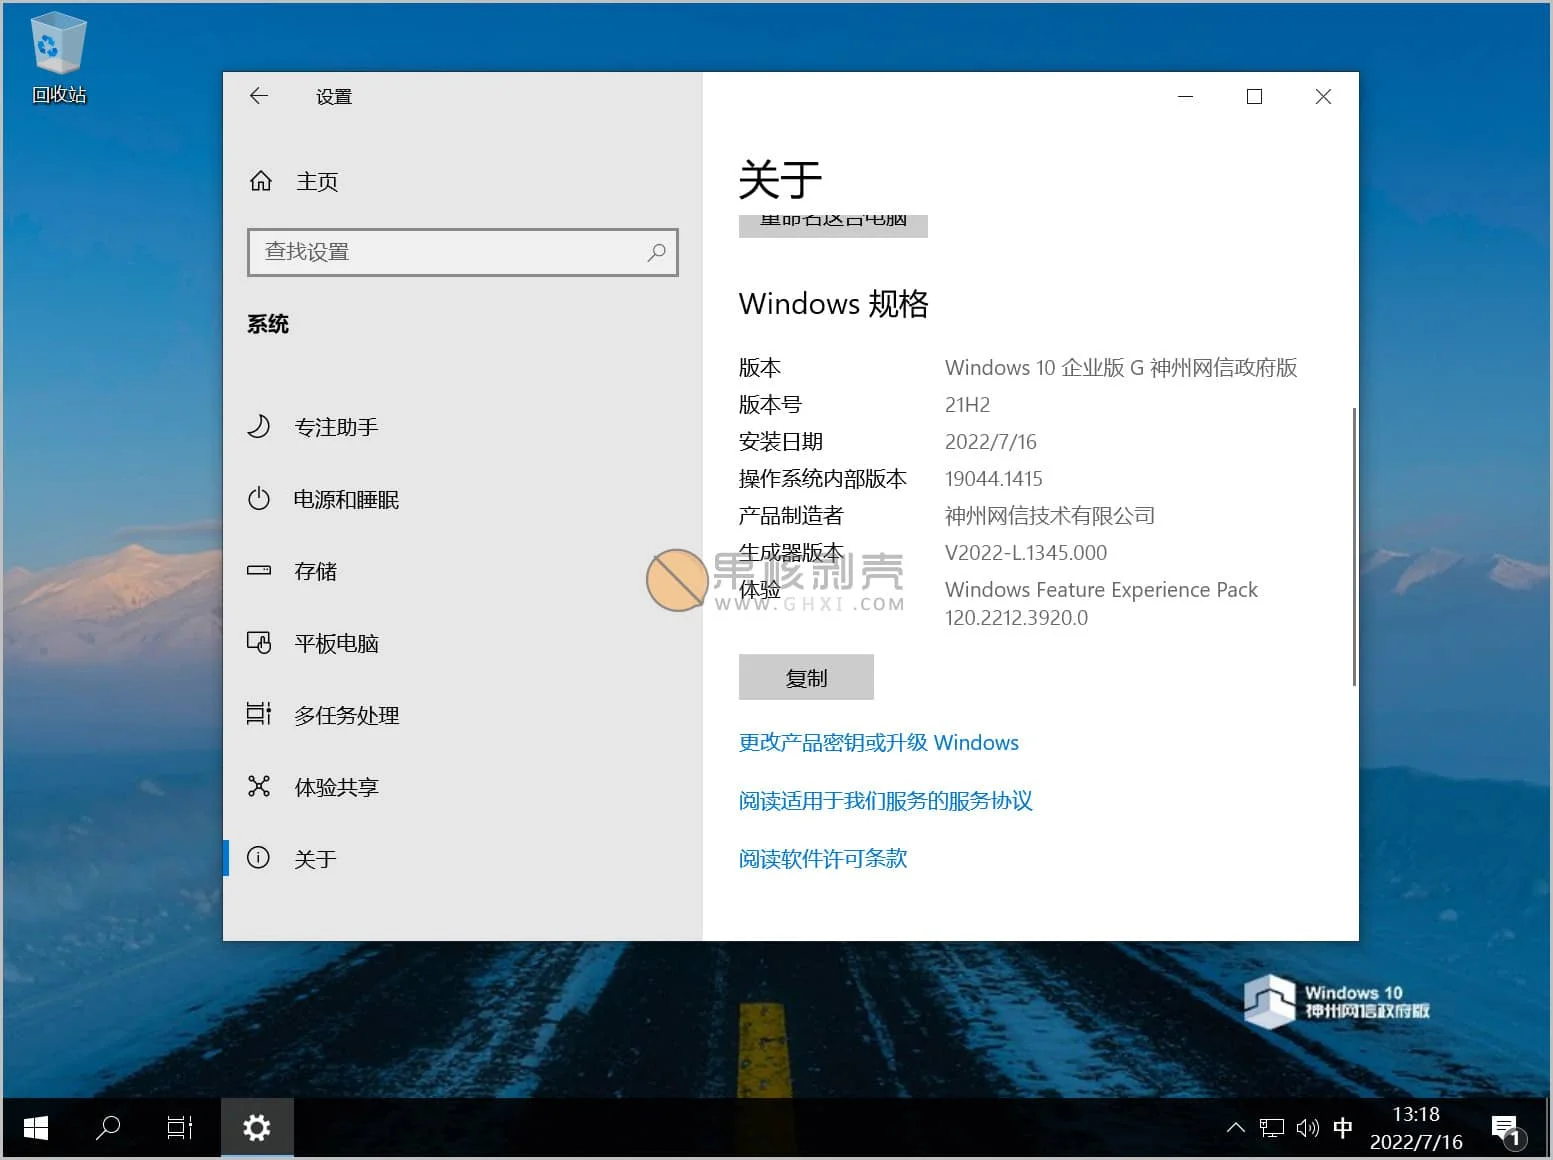 Windows 10 v2022-L.1345 神州网信政府版 - 果核剥壳